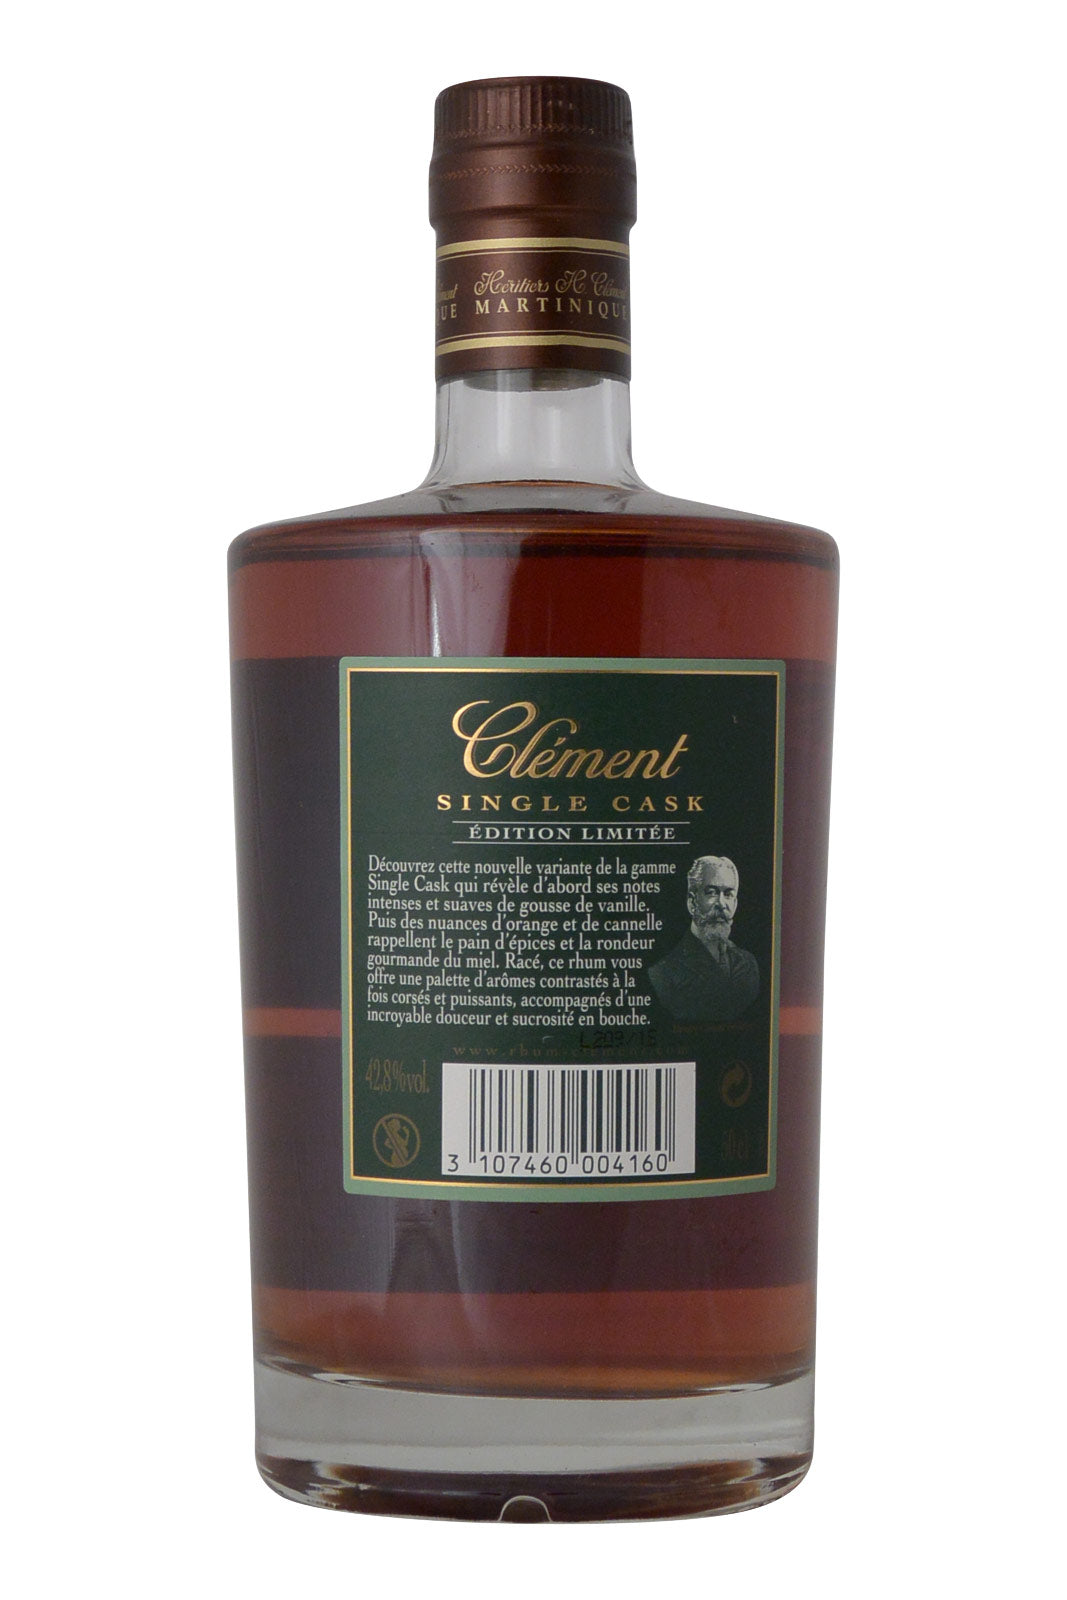 Clement Single Cask Rum 42.8% avril 2004 Vanille Intense